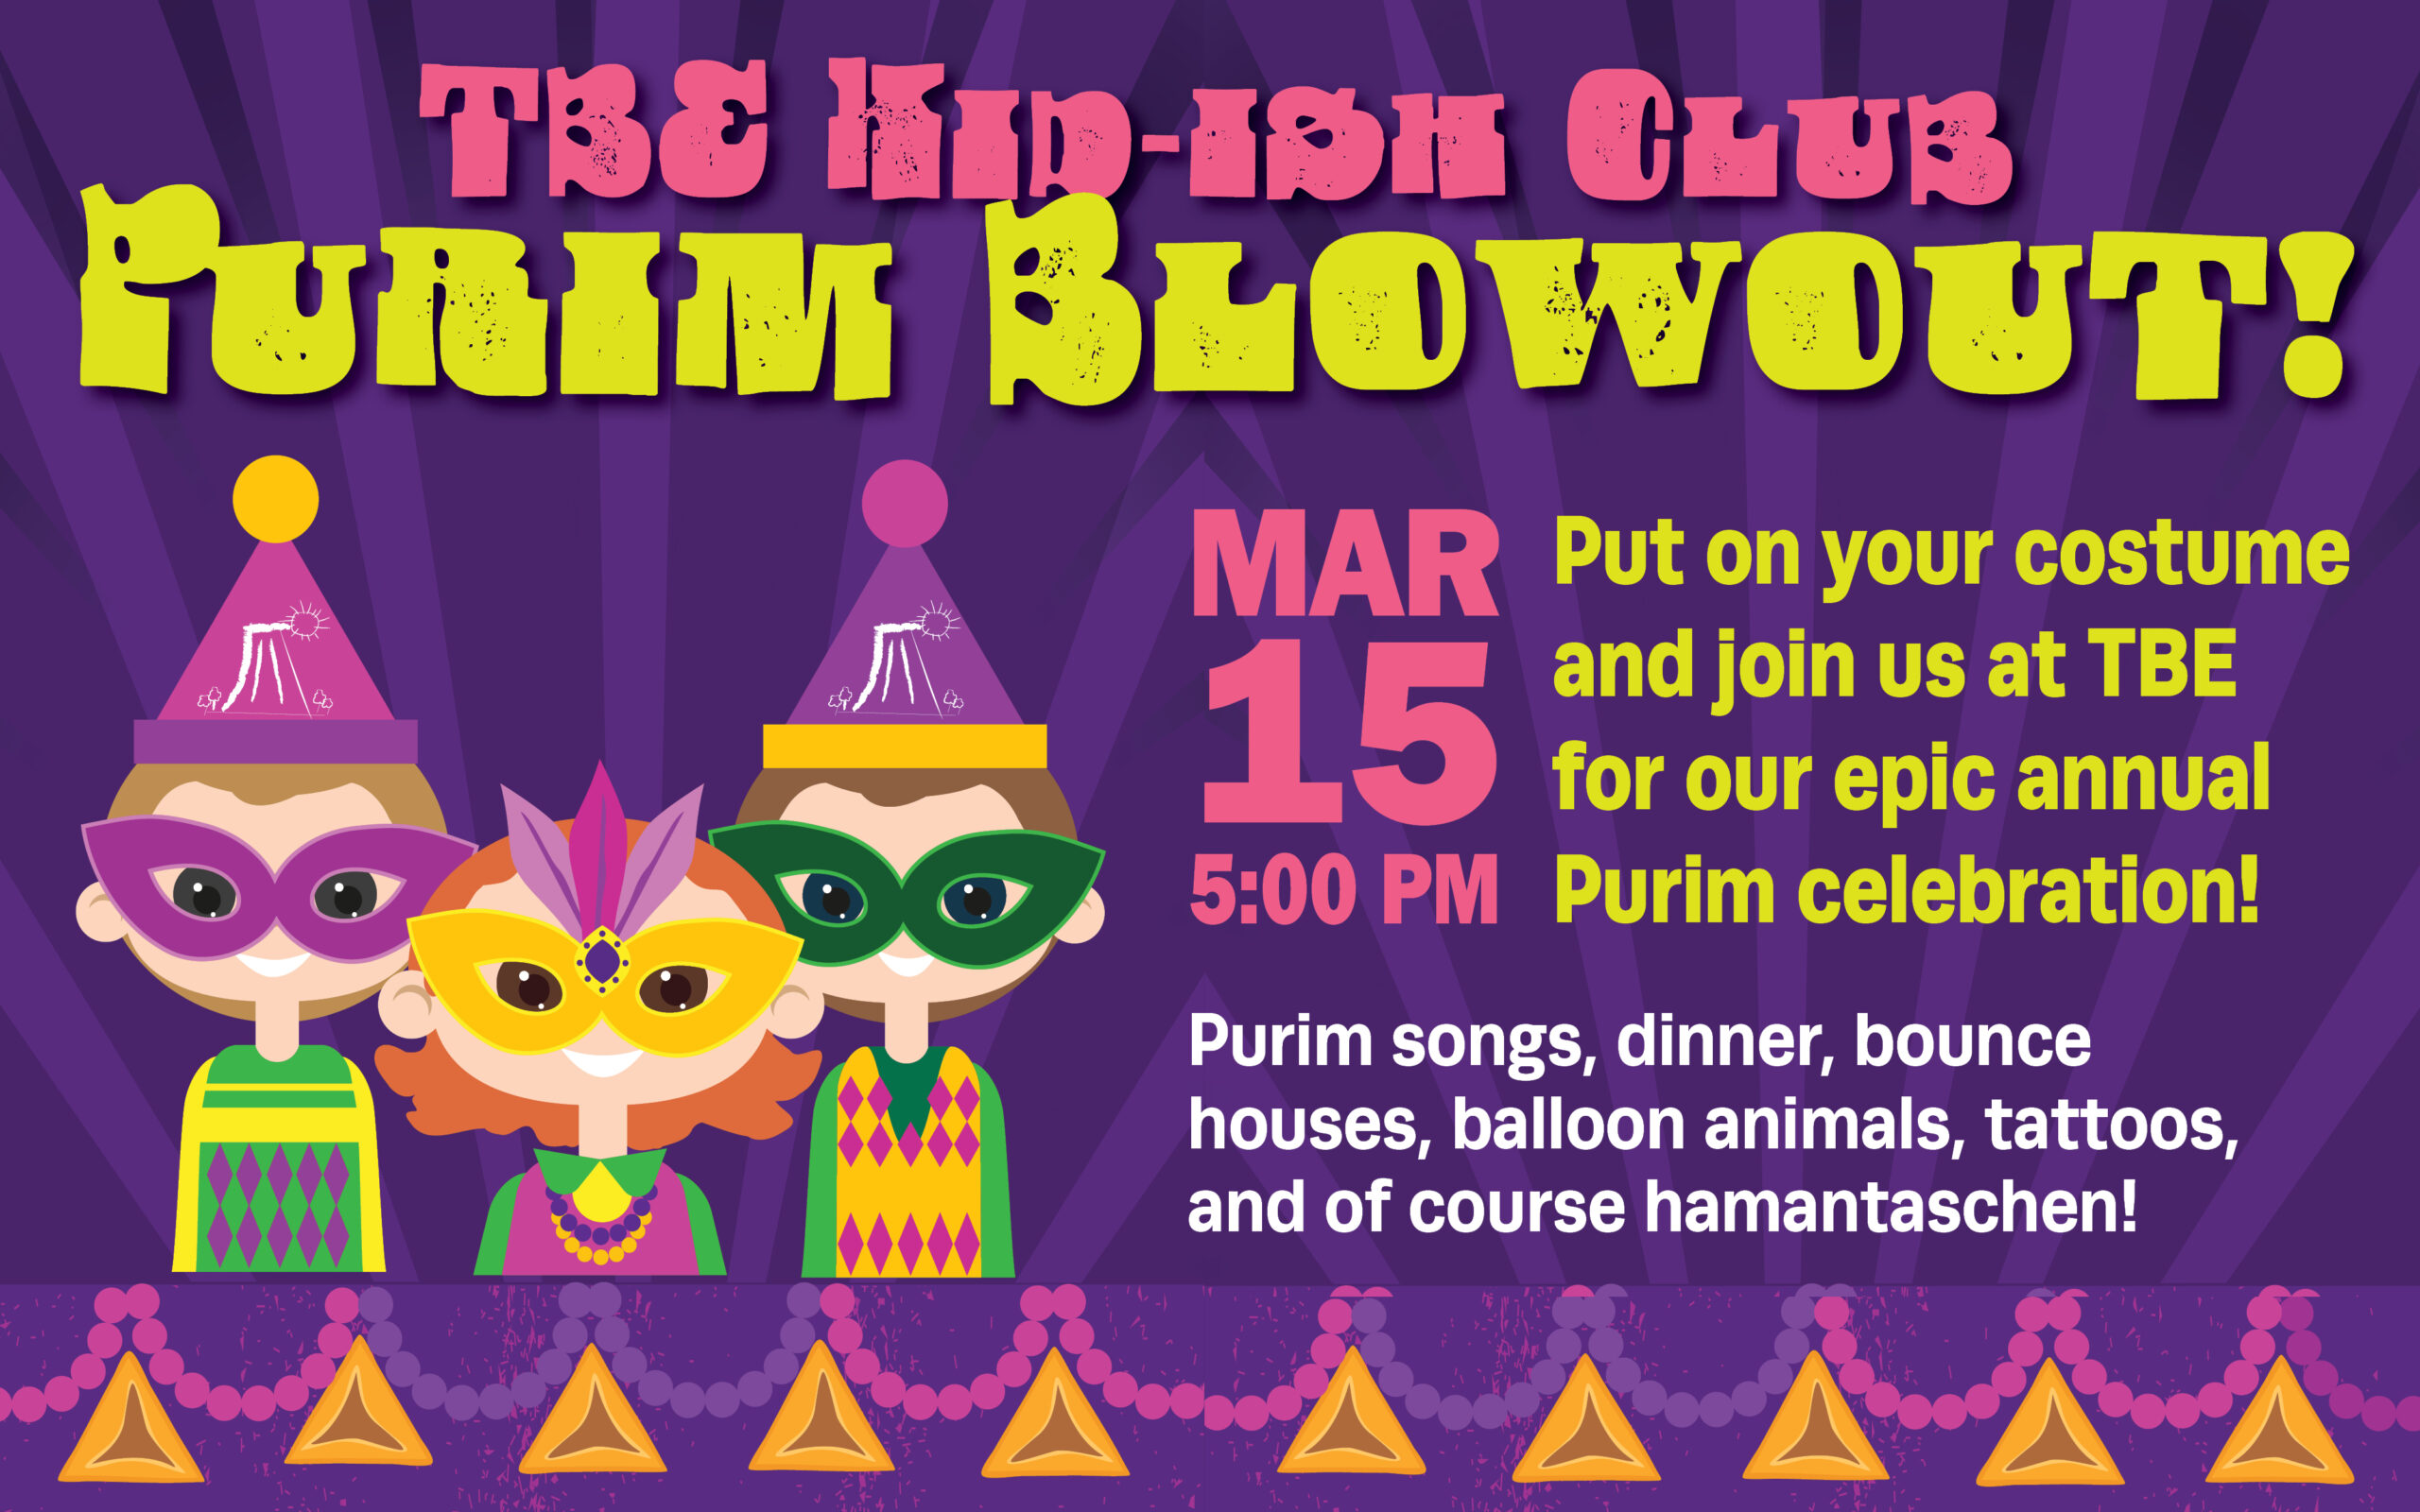 Kid-ish Club Purim Blowout!